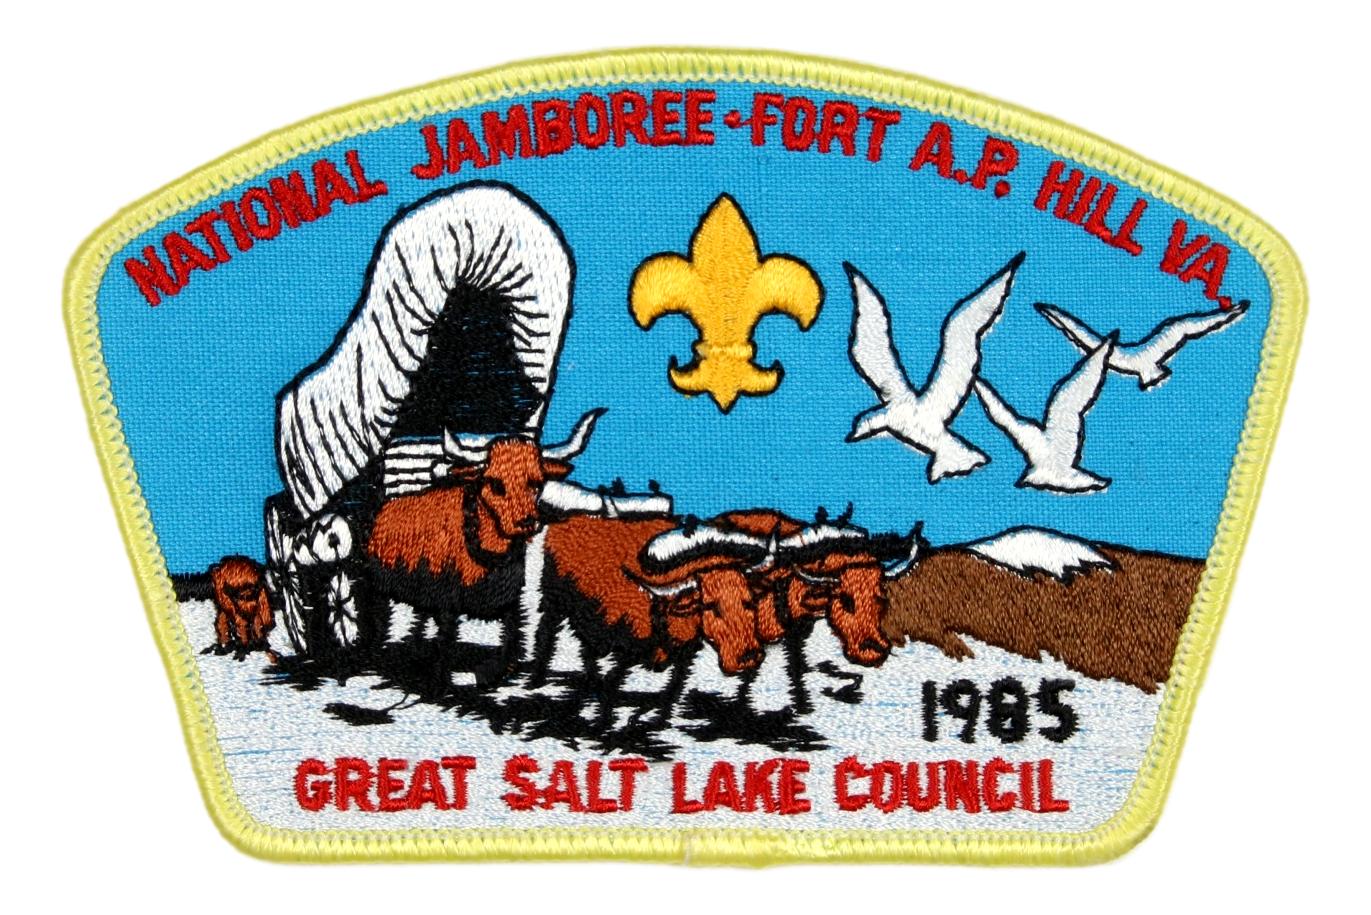 Great Salt Lake JSP 1985 NJ Yellow Border